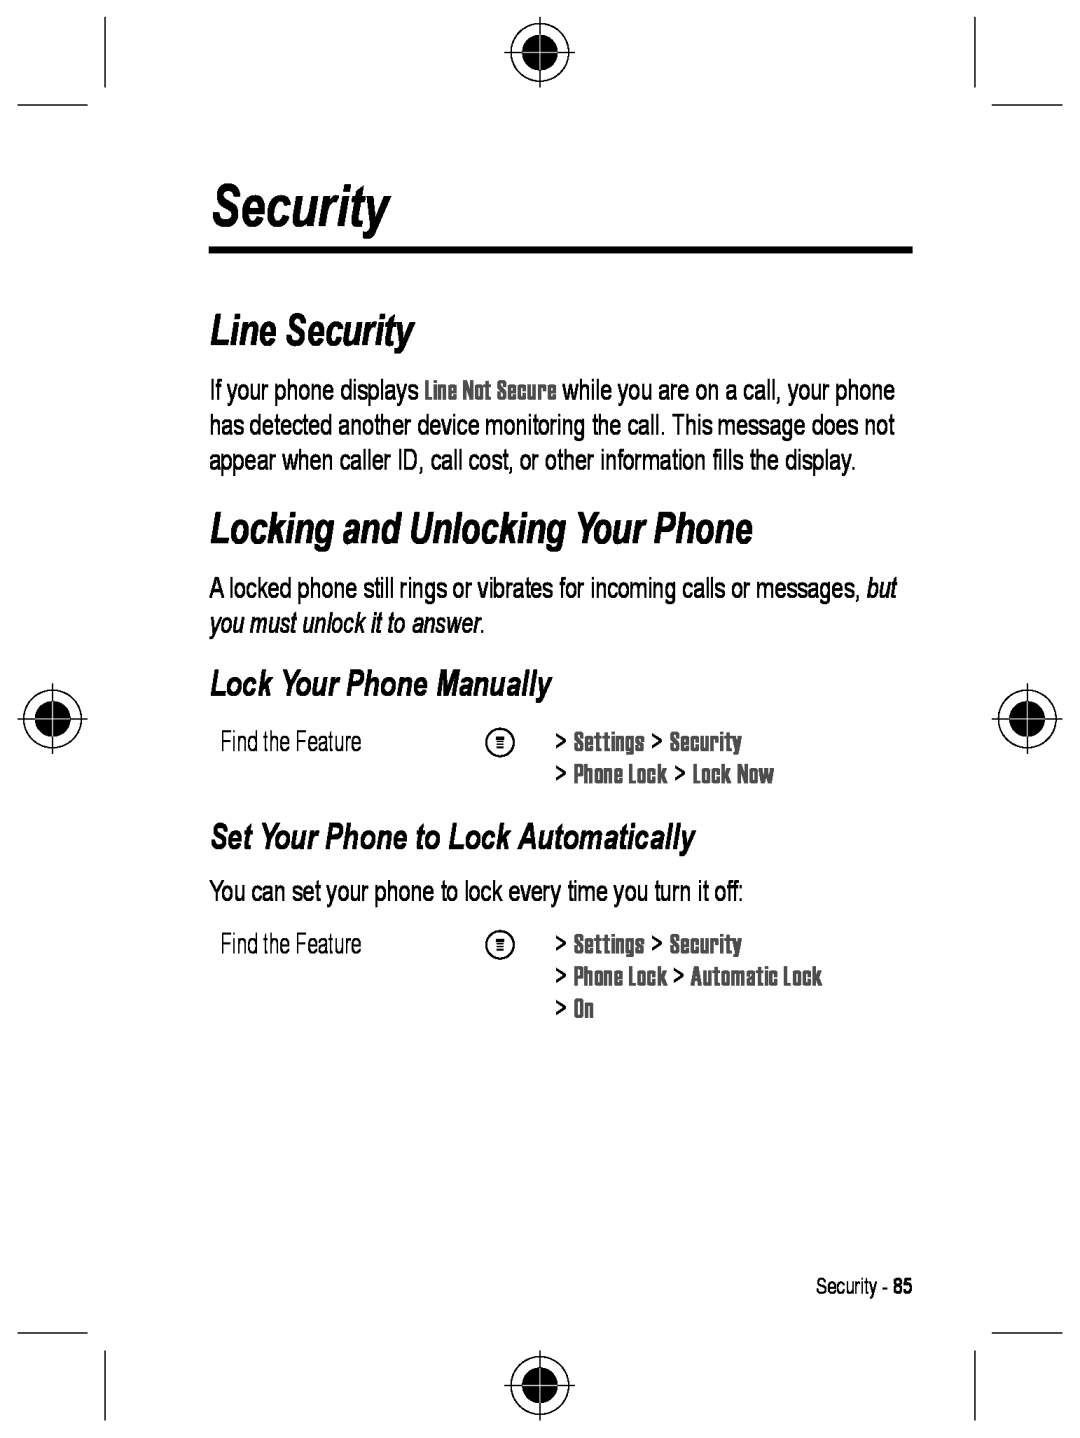 Motorola C330 manual Line Security, Locking and Unlocking Your Phone, Lock Your Phone Manually, M Settings Security 